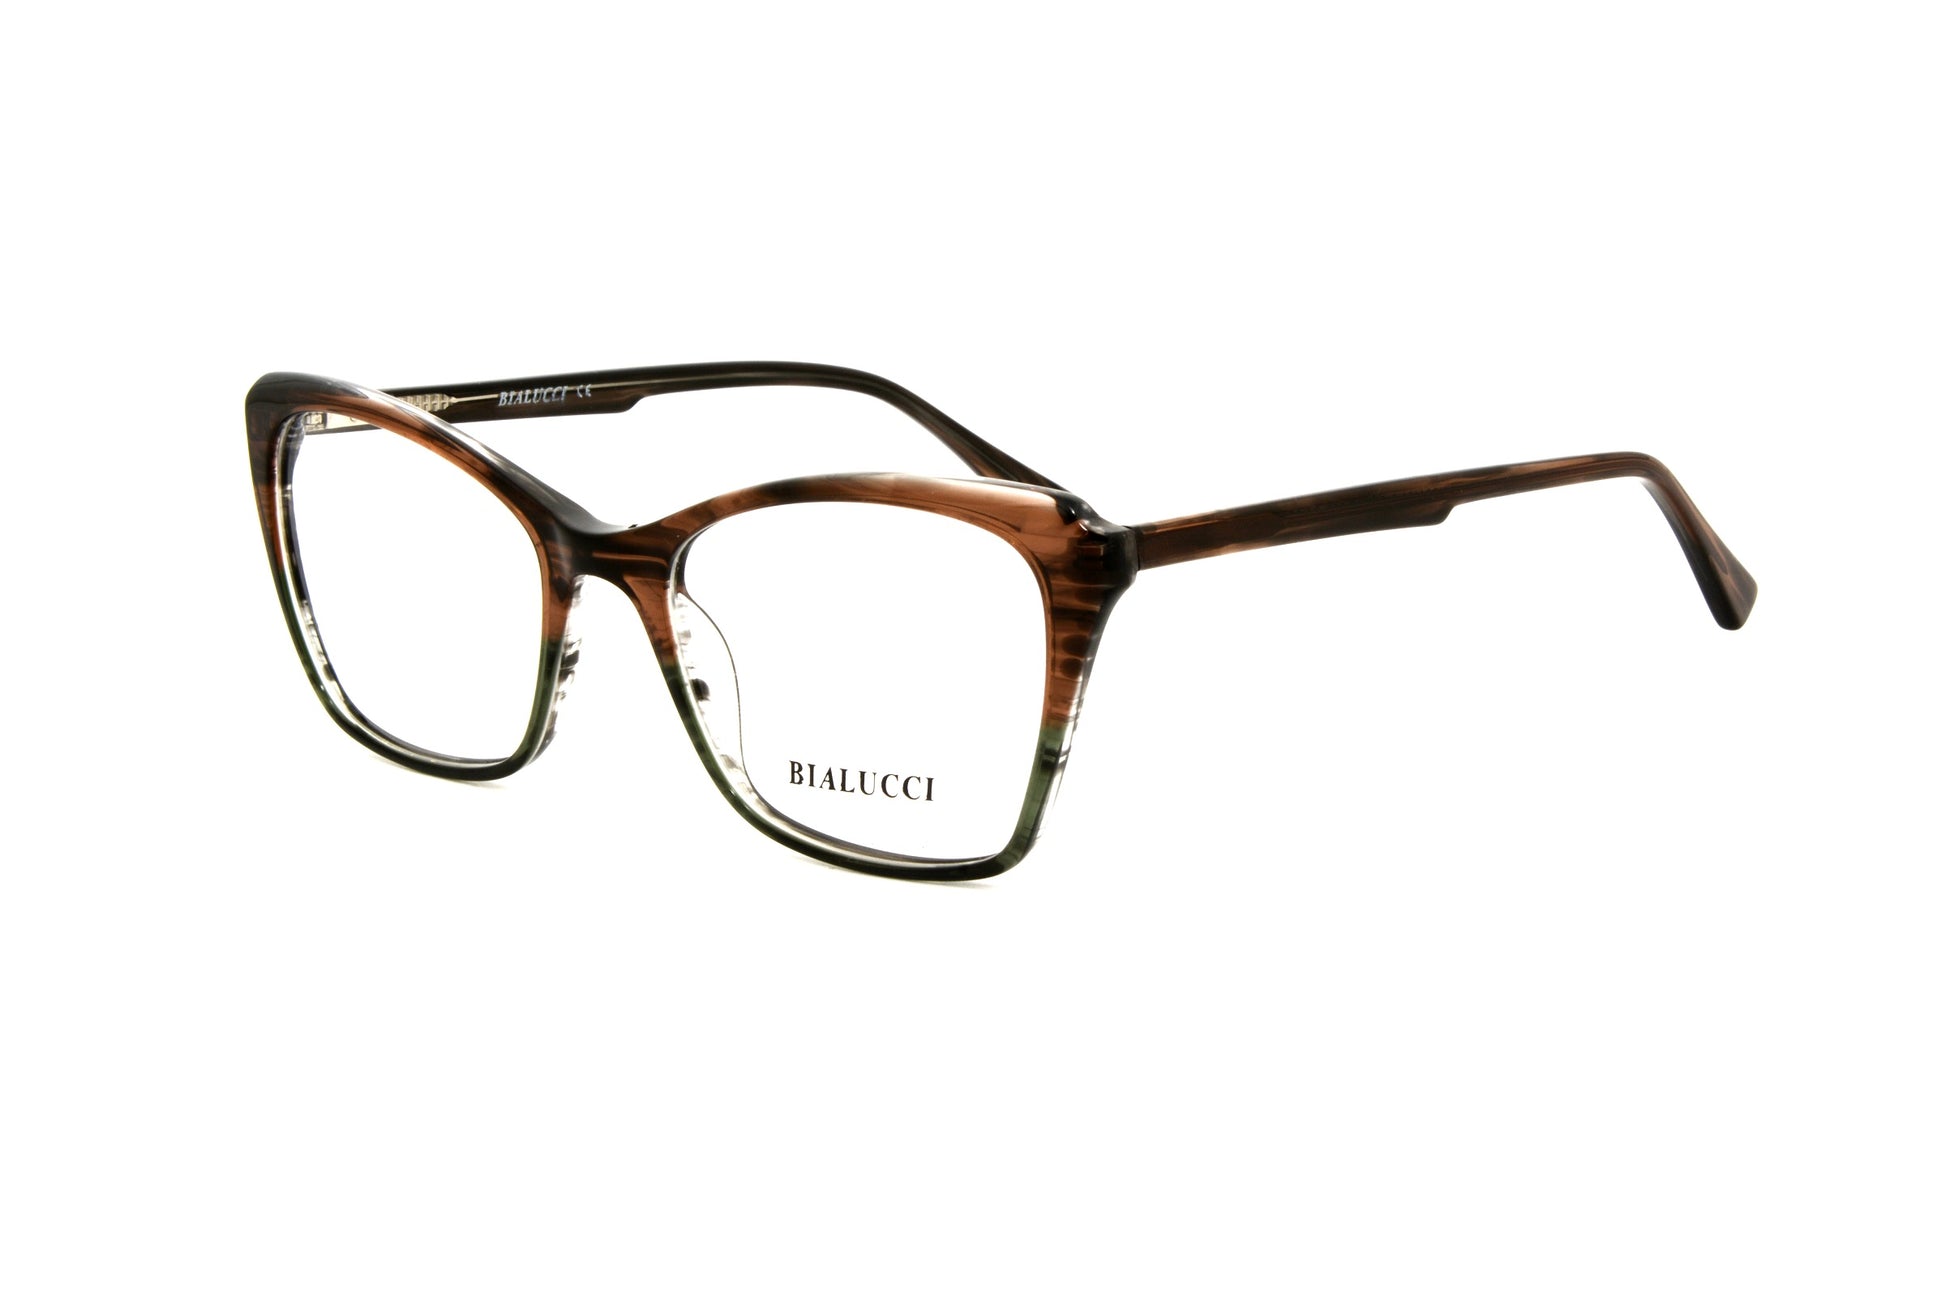 Bialucci eyewear XC 84101-2 C4